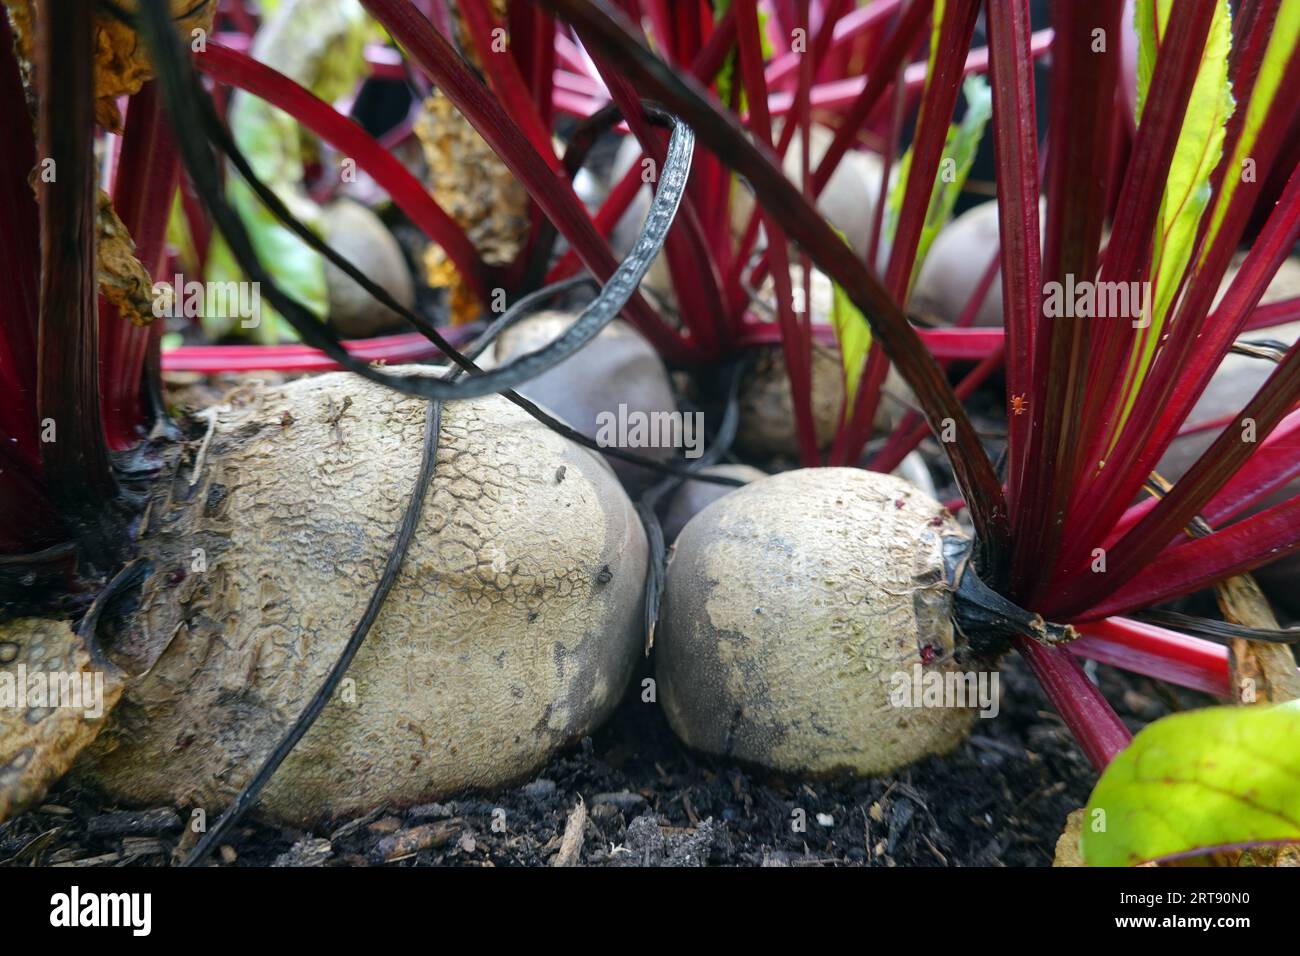 Rote Beete (Beta vulgaris subsp. Vulgaris), Rote Rübe, Pflanzen im Hochbeet Foto Stock